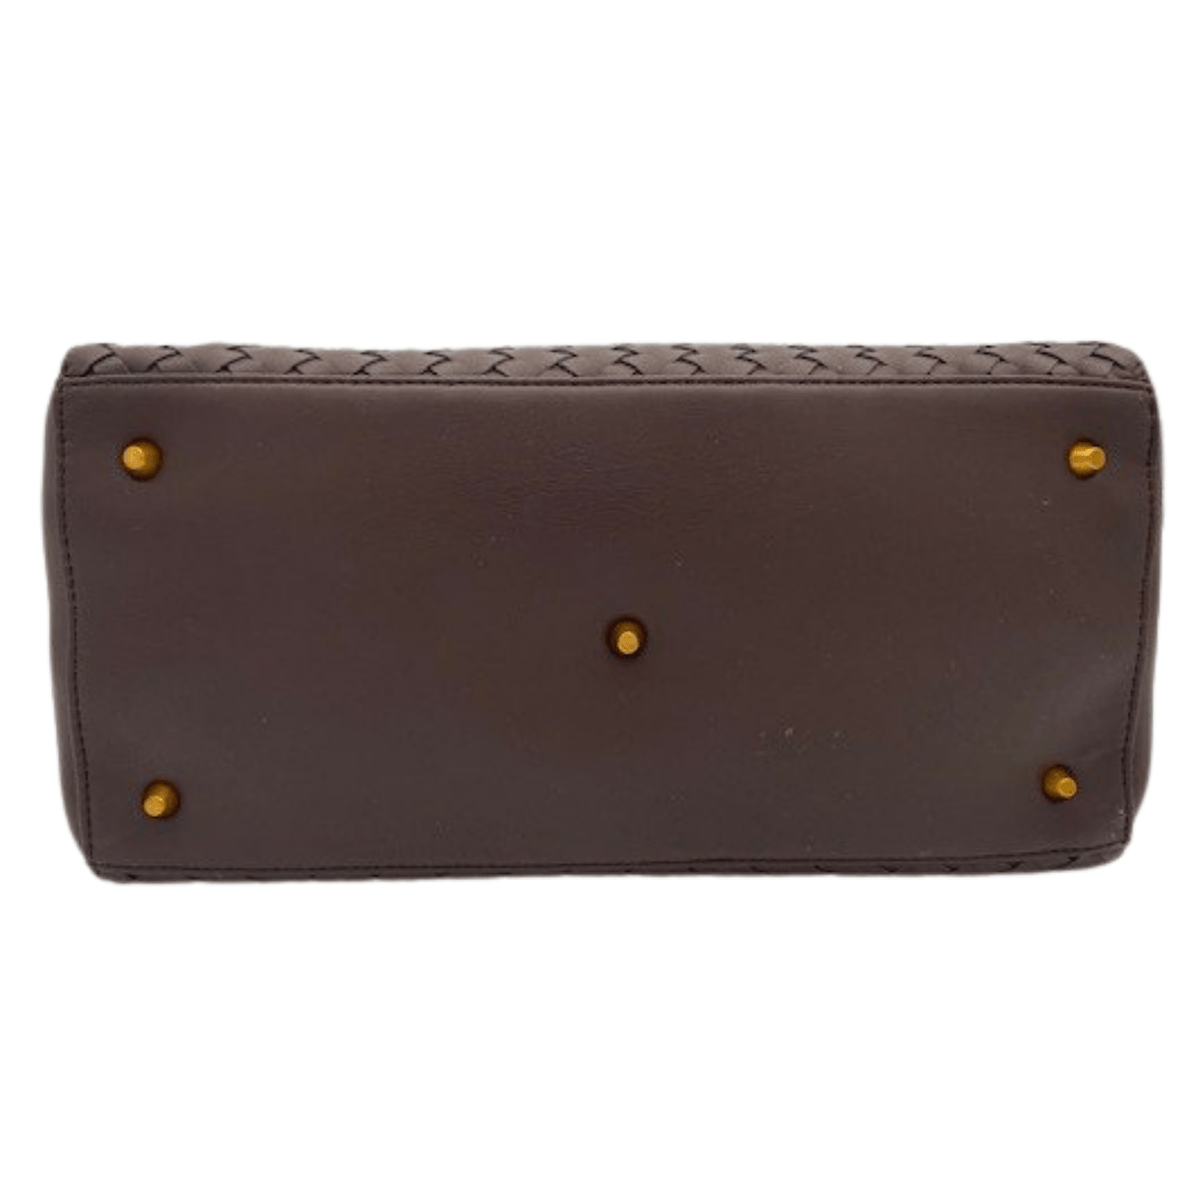 Baxter Camera Crossbody (Black)- Designer leather Handbags